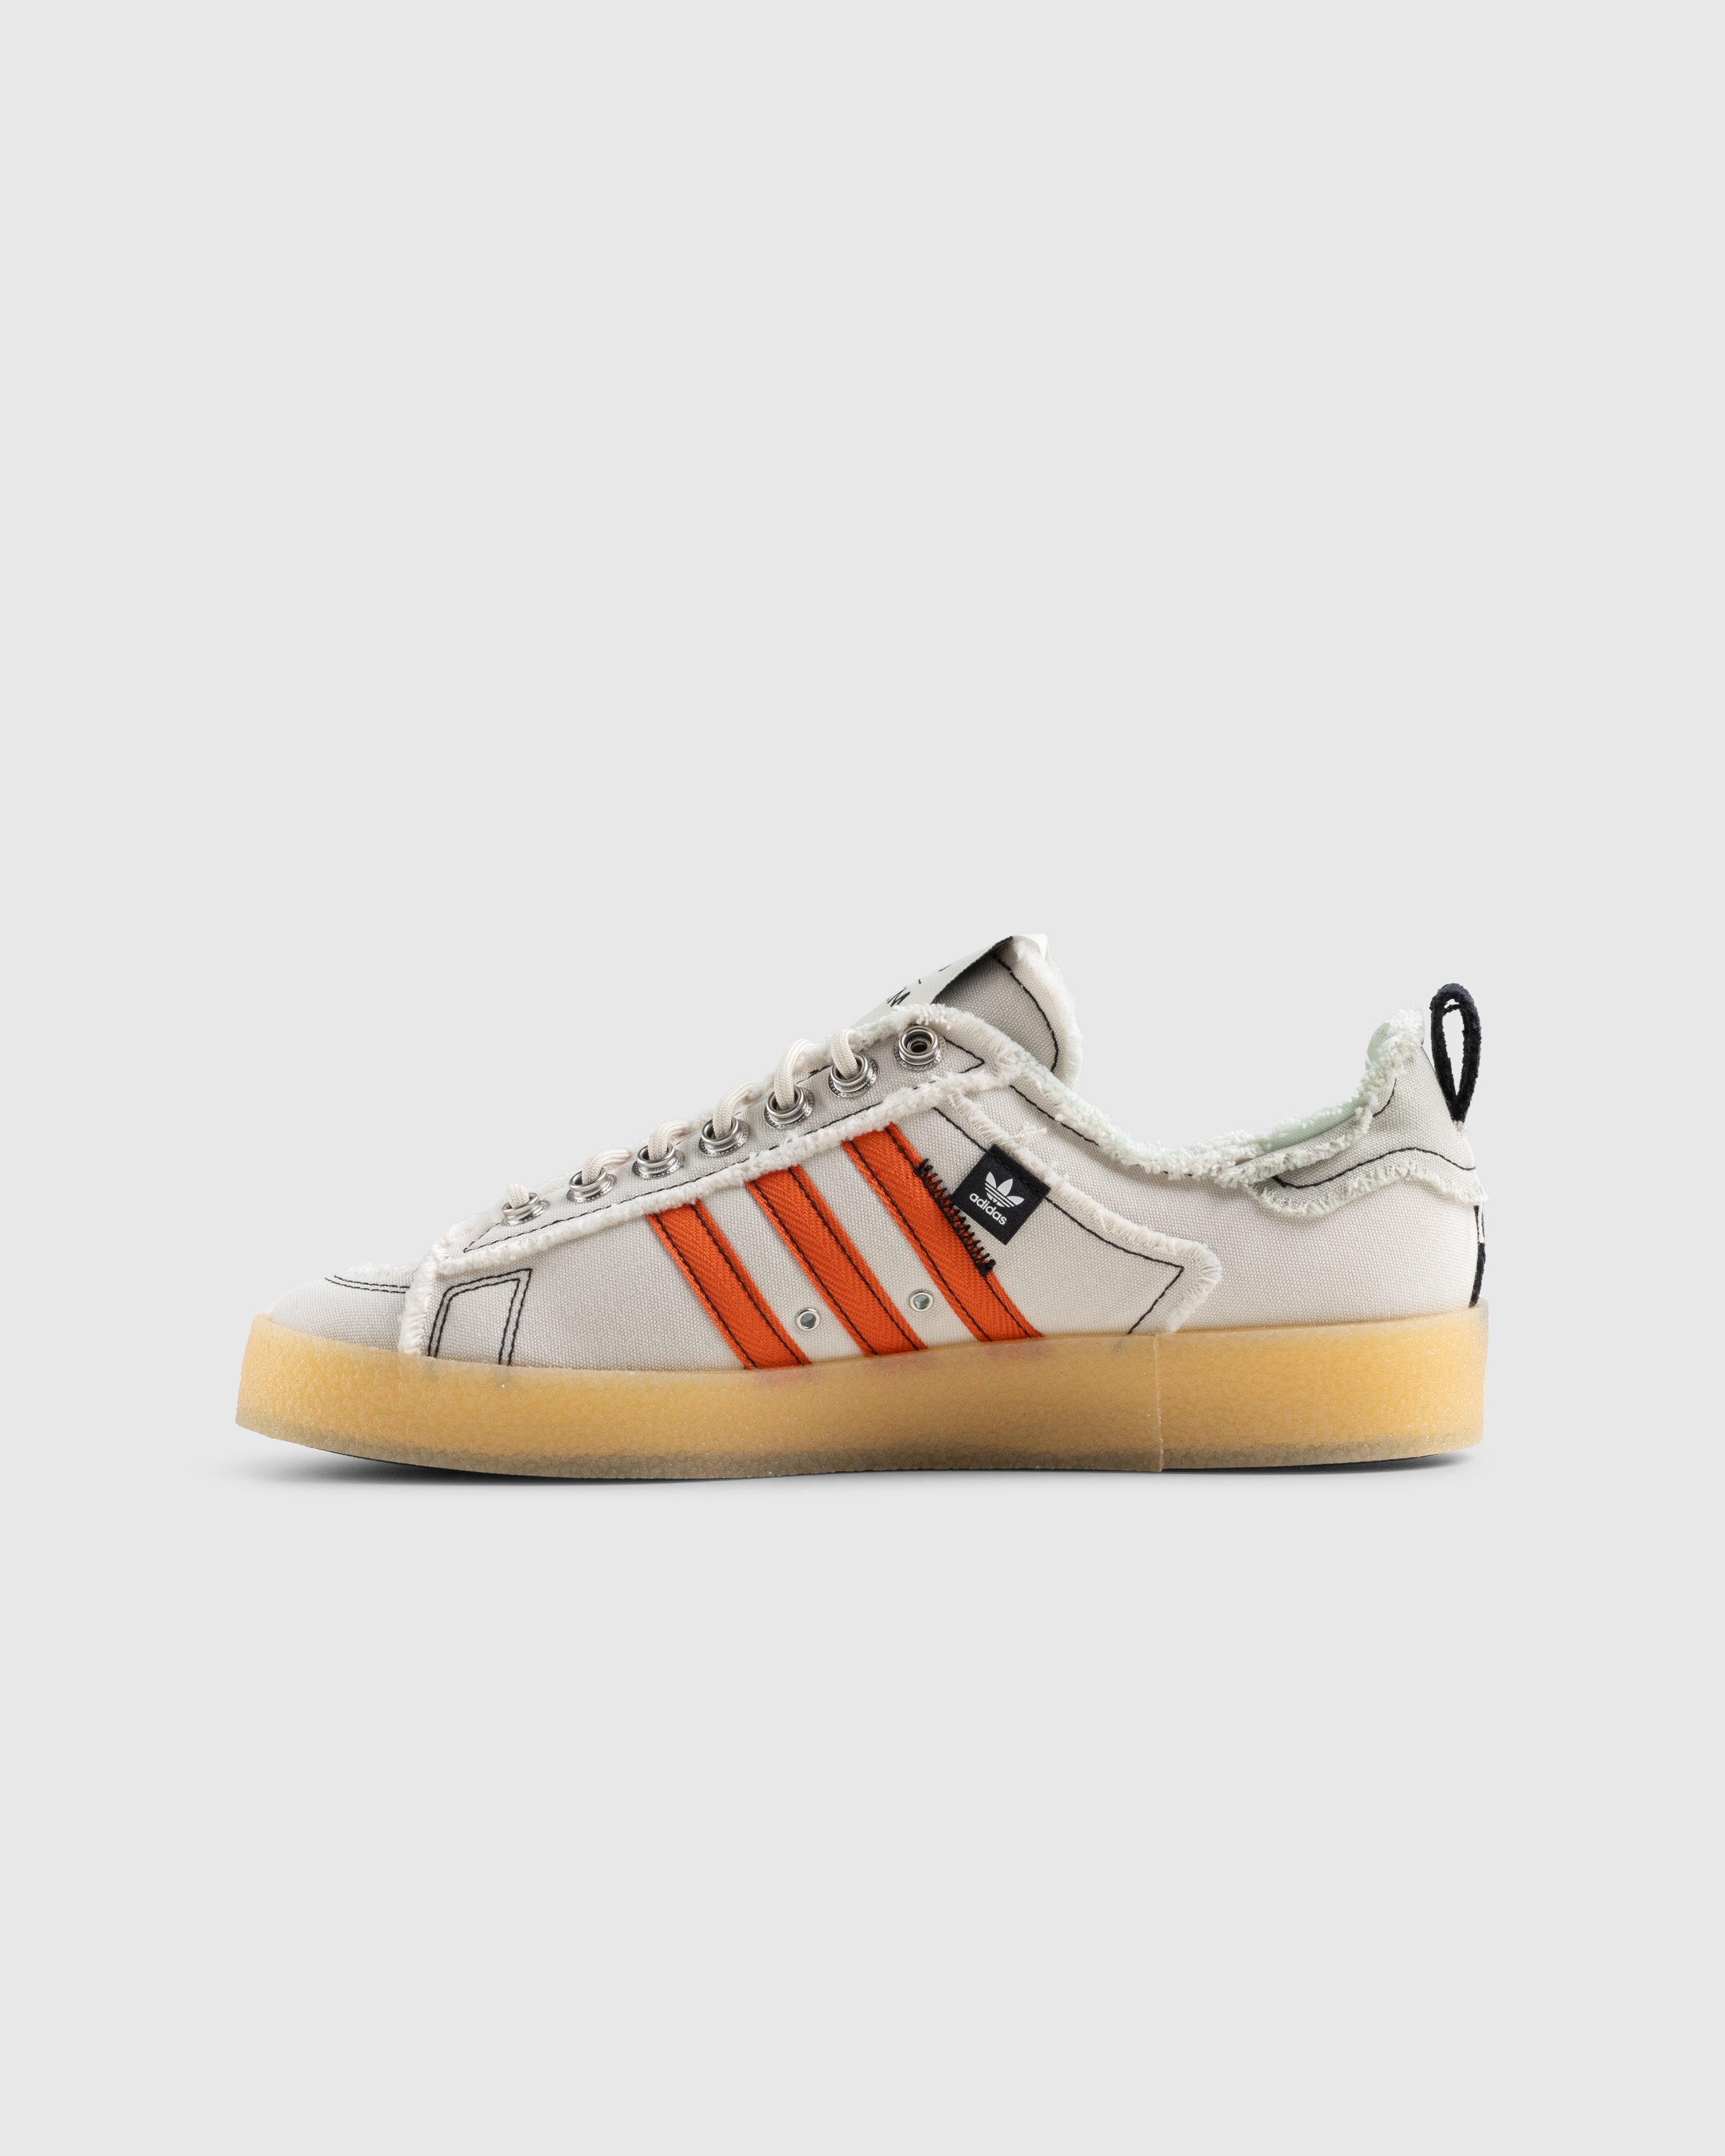 Adidas - CAMPUS 80s CBROWN/CBLACK/SESAME - Footwear - Brown - Image 2